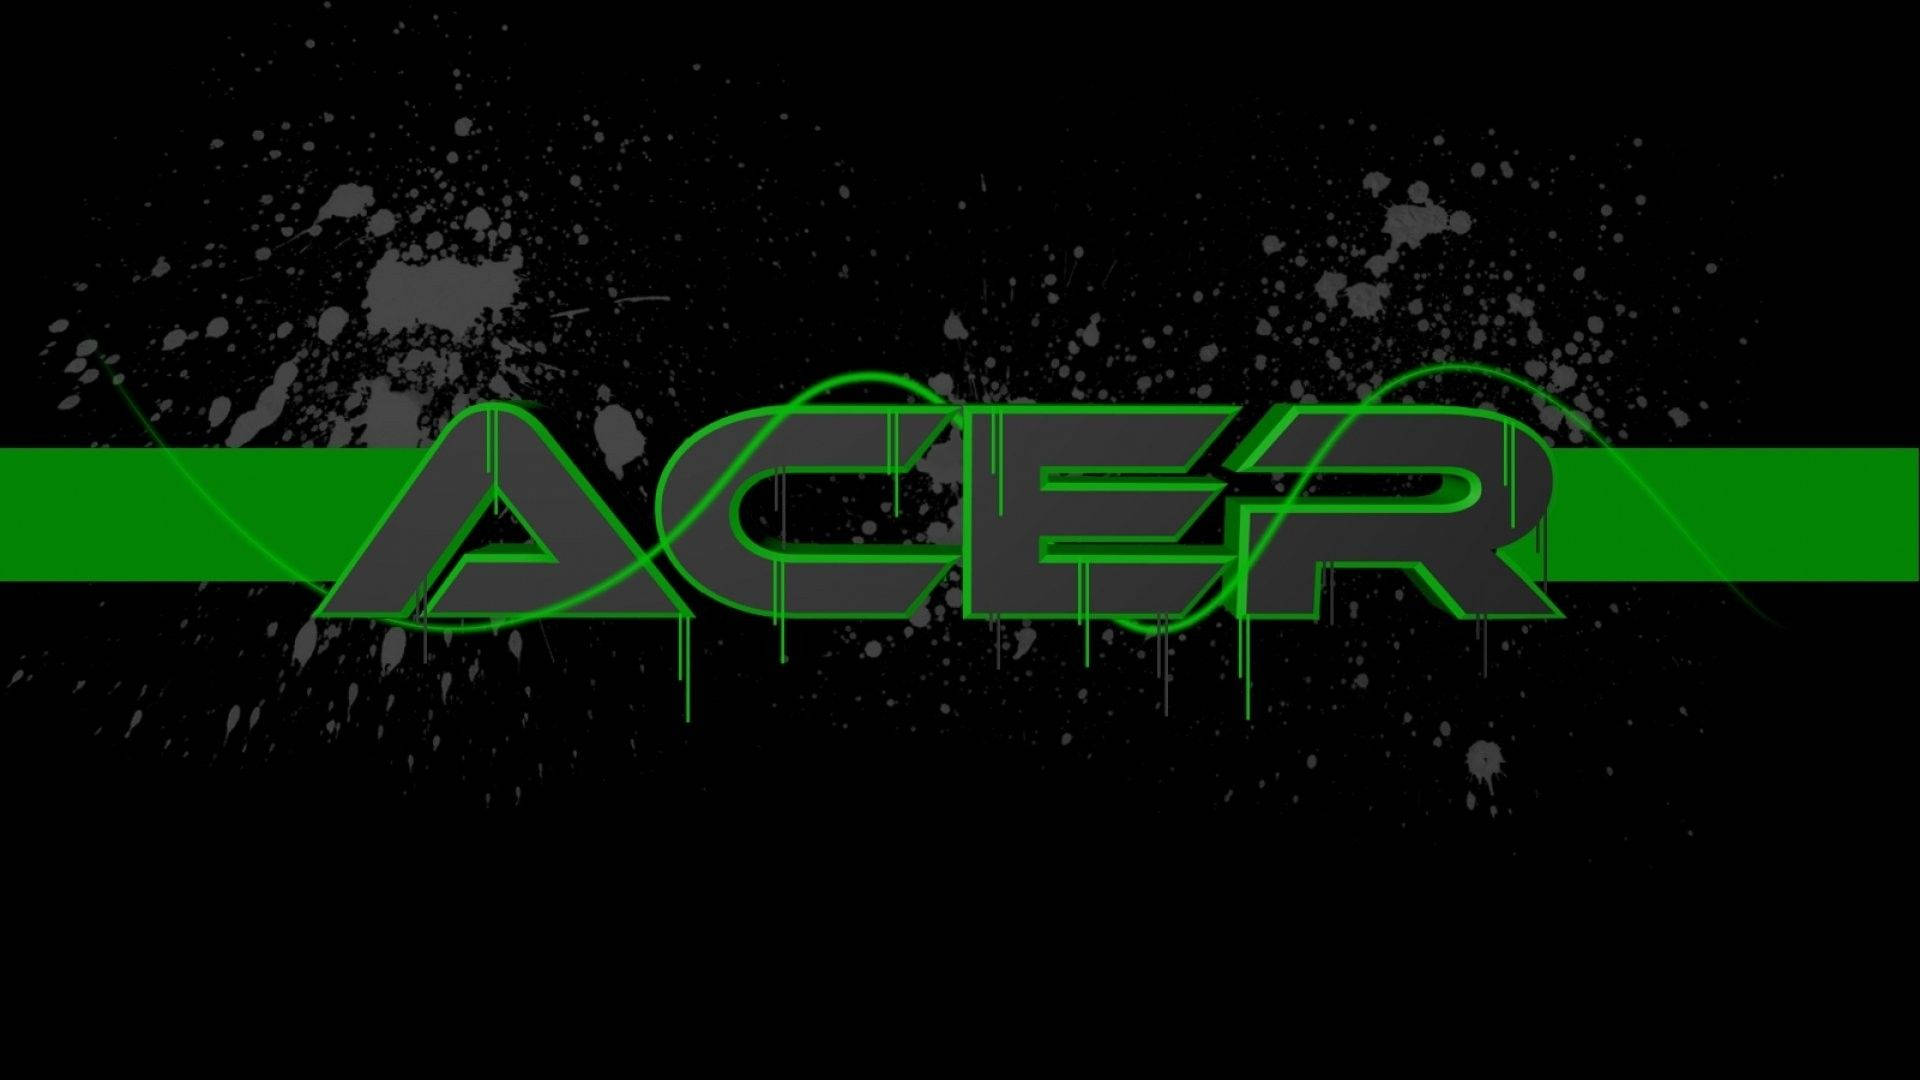 Captivating Acer Logo Paint Splatters Wallpaper